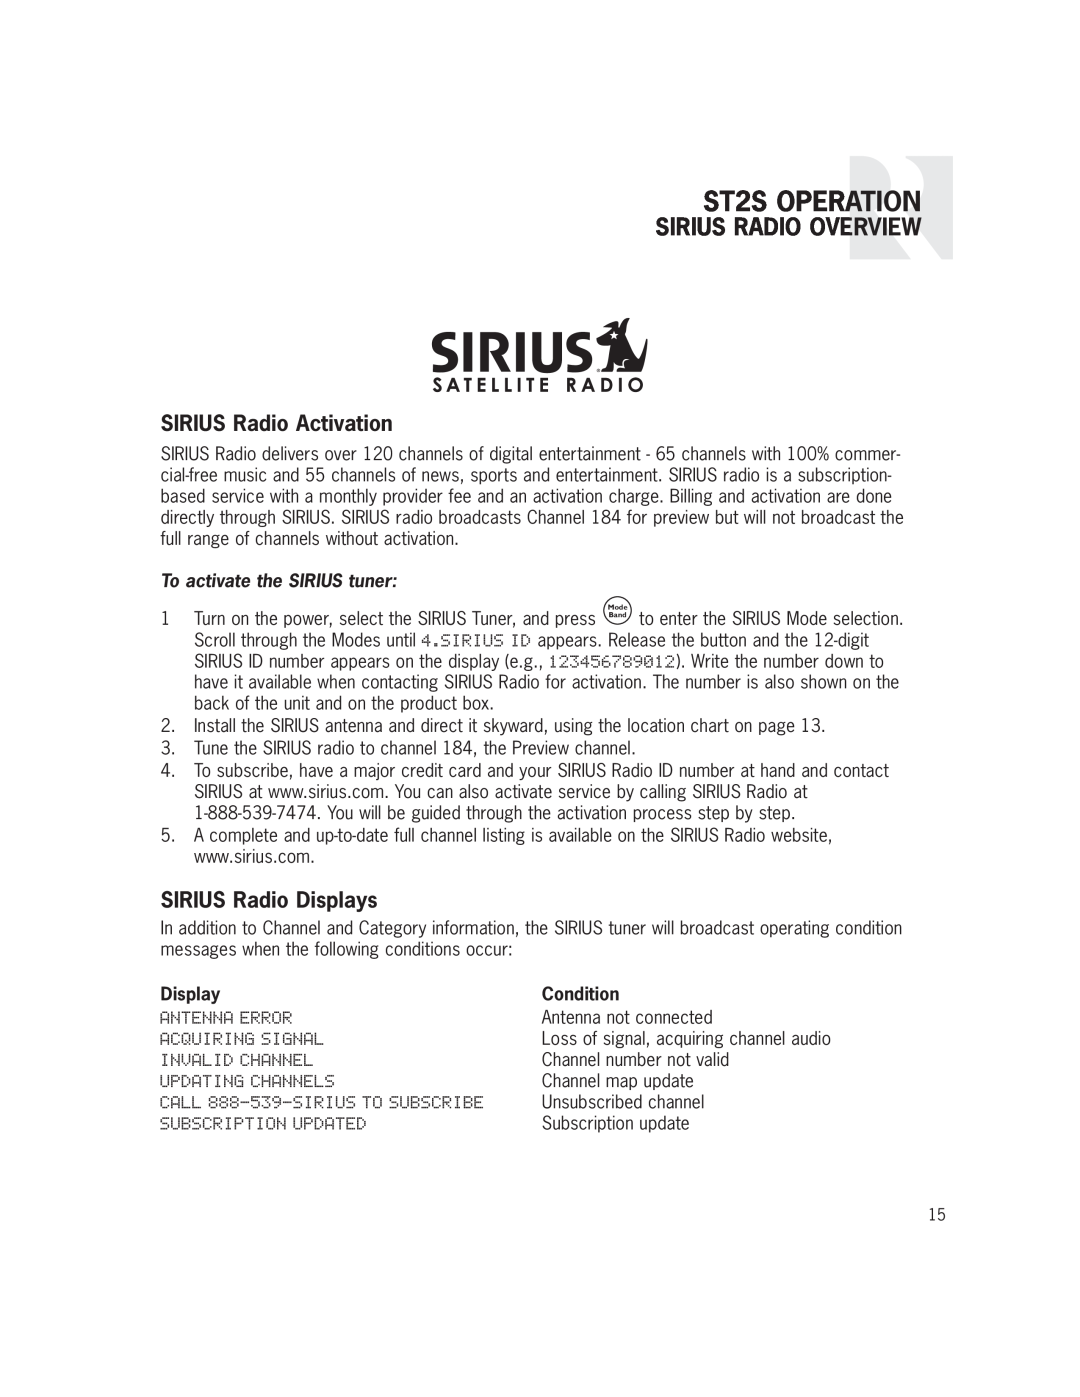 Russound installation manual ST2S OPERATION, Sirius Radio Overview, SIRIUS Radio Activation, SIRIUS Radio Displays 